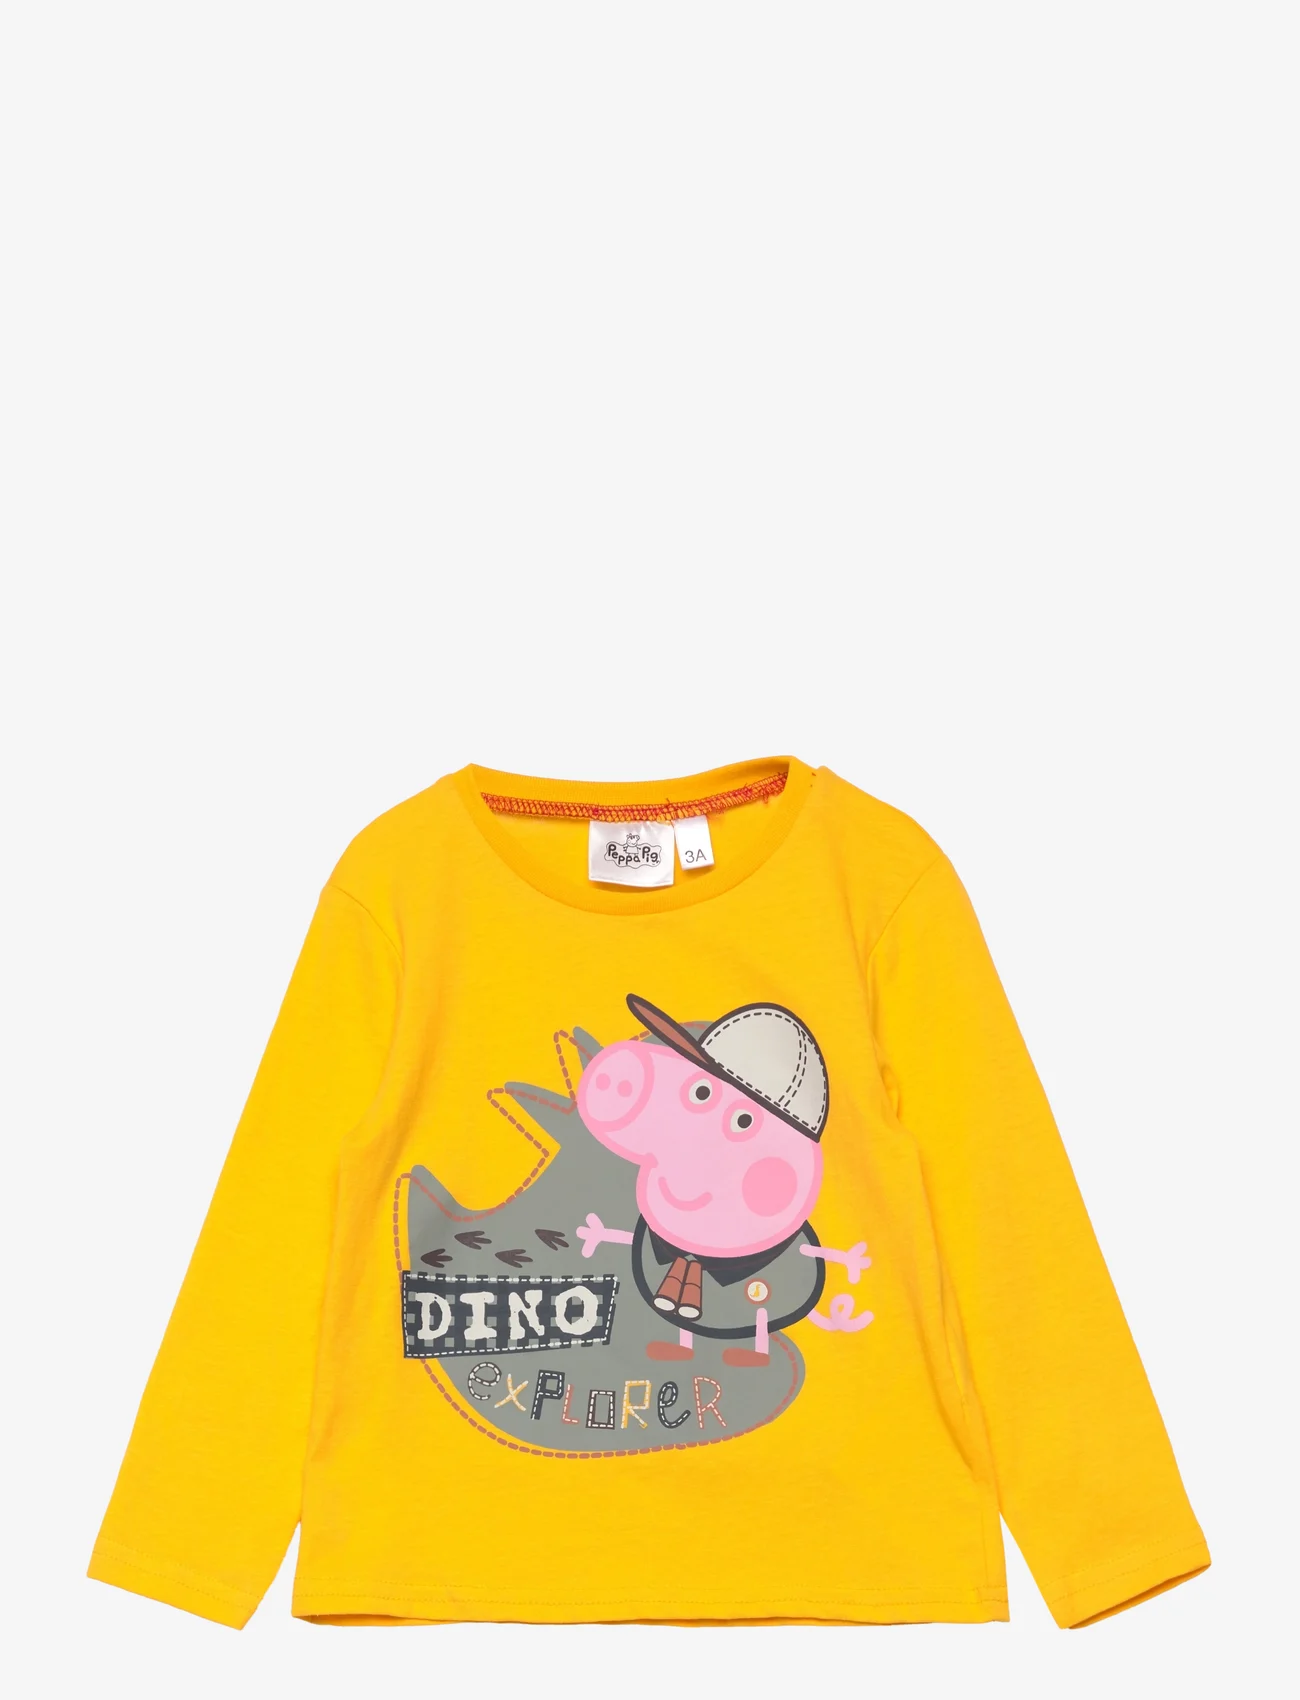 Peppa Pig - LONG-SLEEVED T-SHIRT - long-sleeved t-shirts - yellow - 0